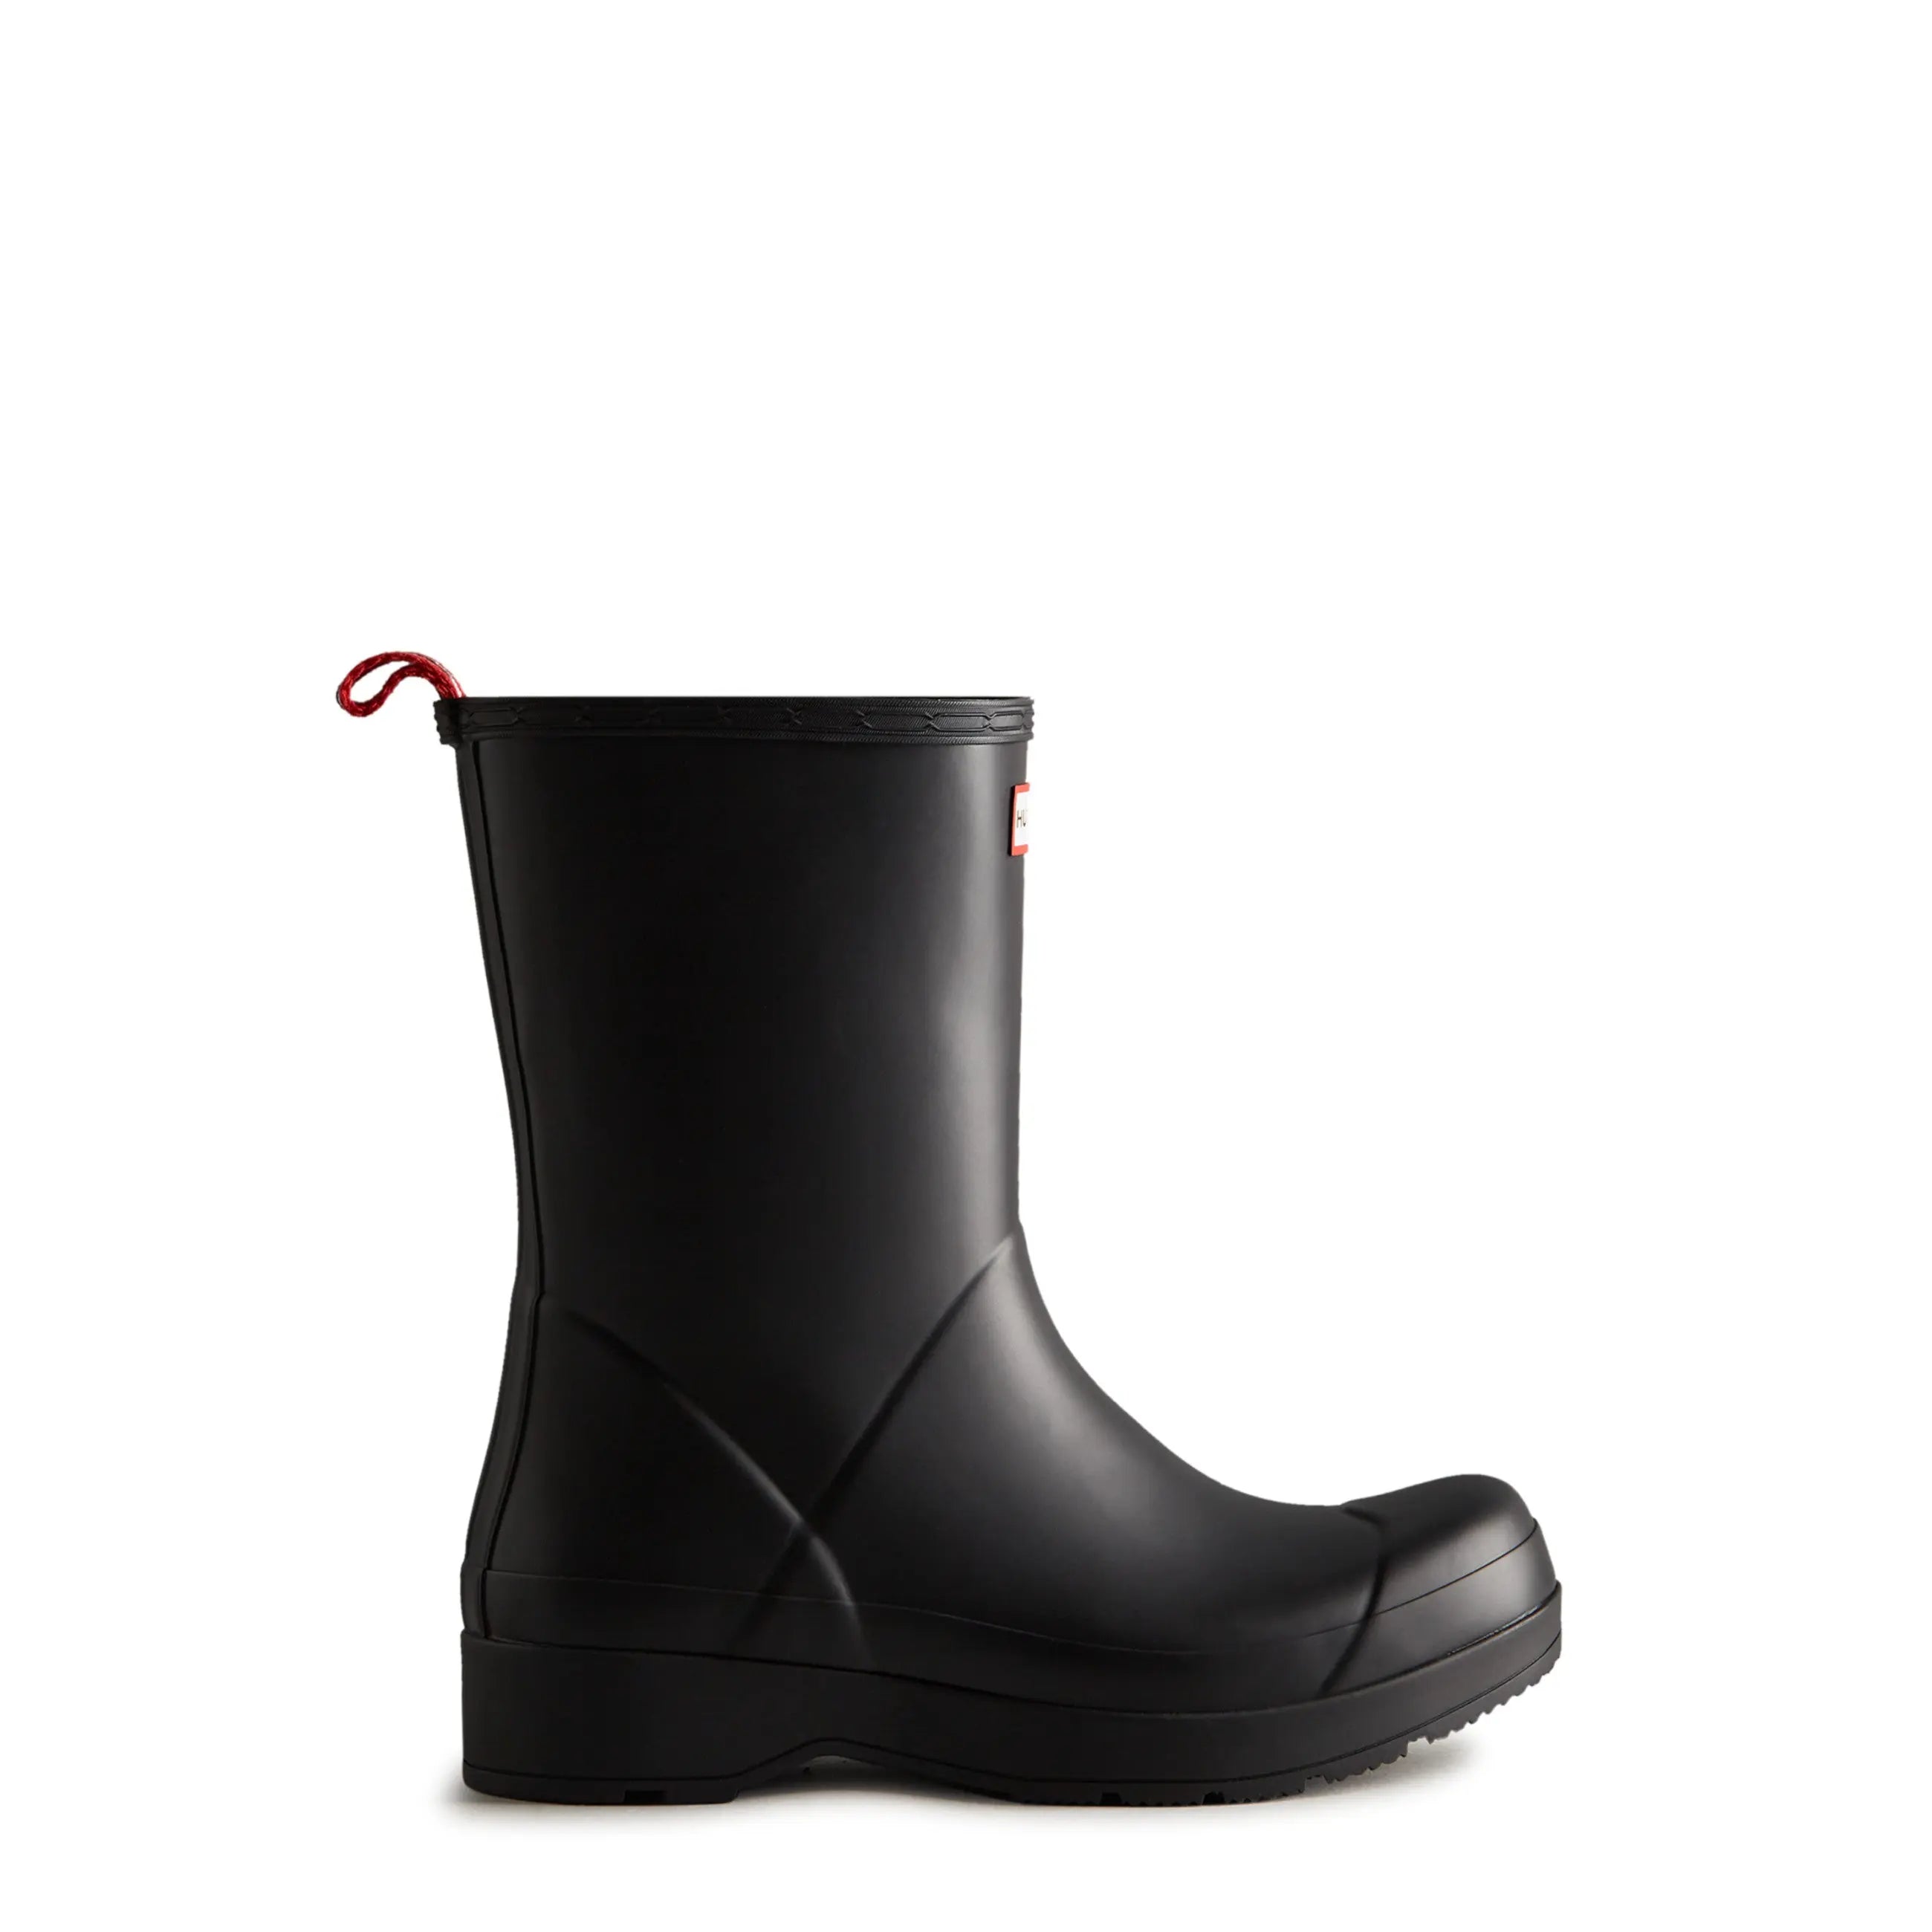 Men's PLAY™ Rain Boots - Hunter Boots Men's PLAY™ Rain Boots Black Hunter Boots Men's > Rain Boots > Play Boots